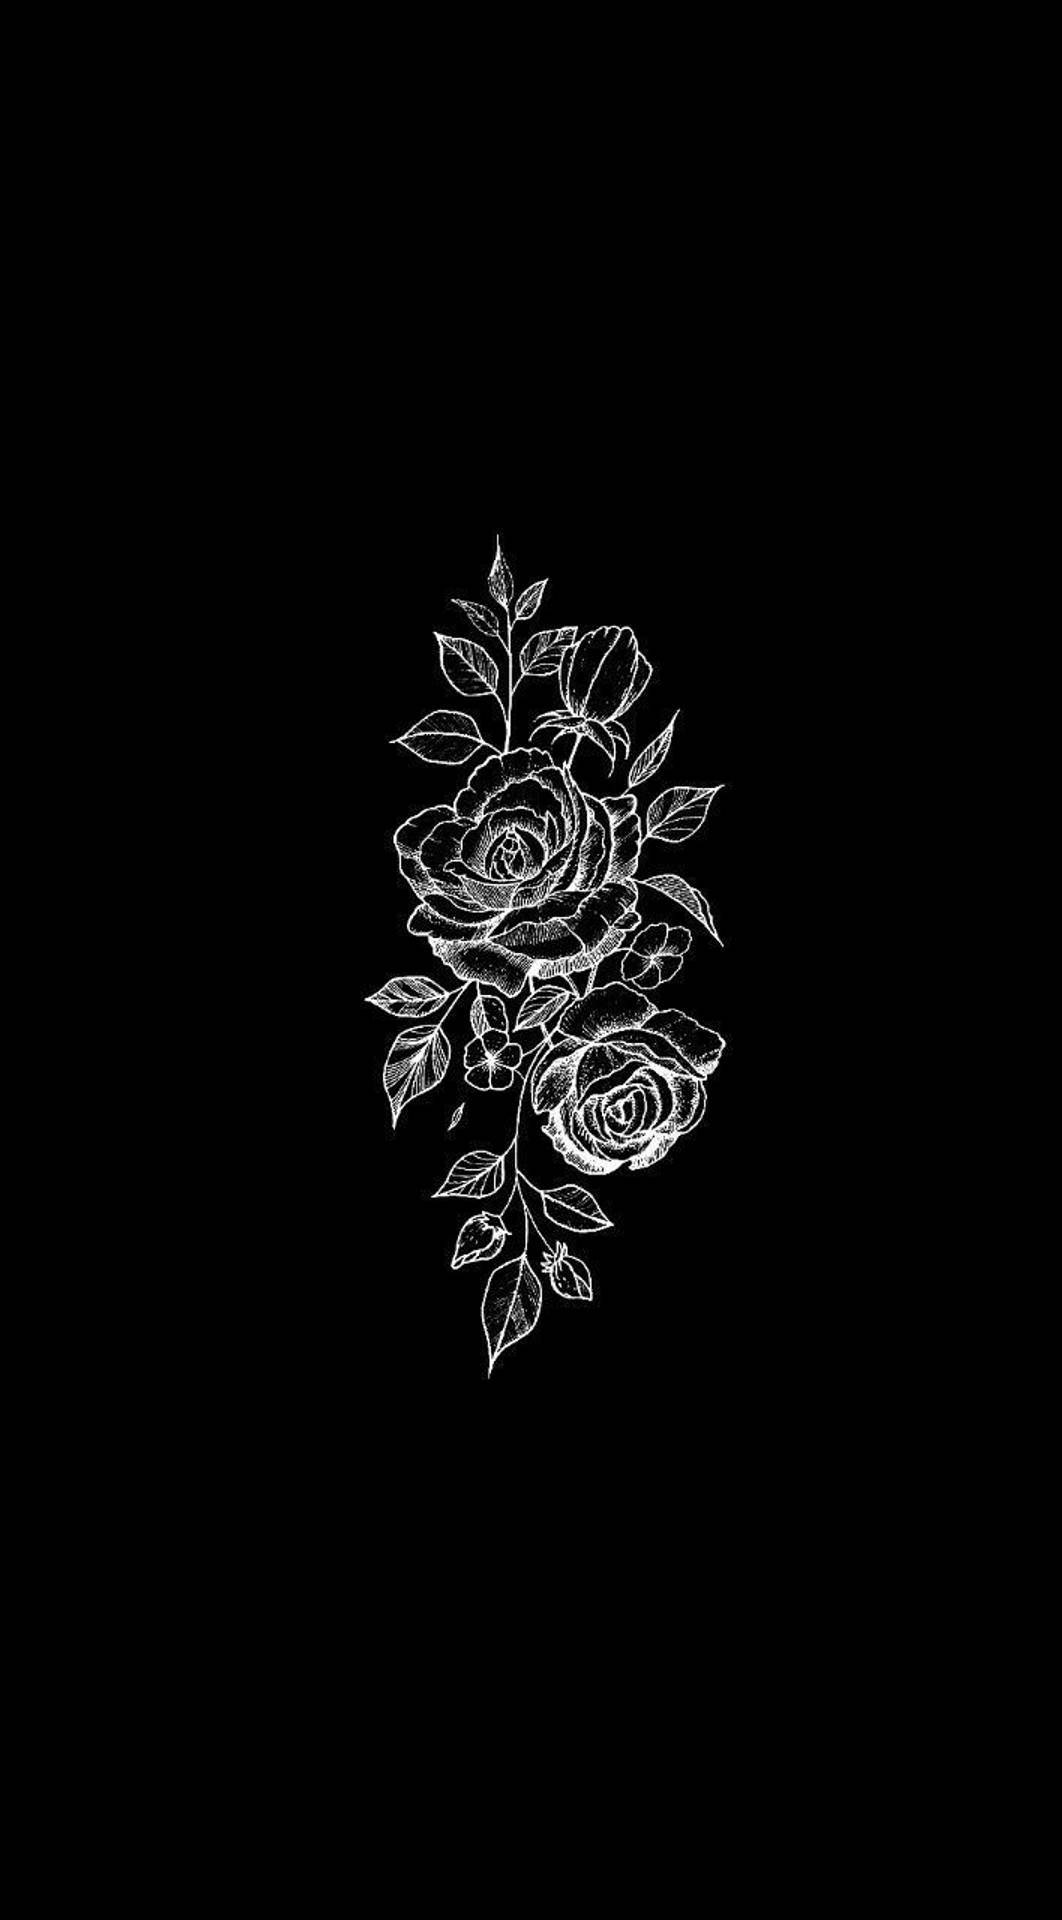 Caption: Elegant Black & White Aesthetic Rose Profile Picture Wallpaper